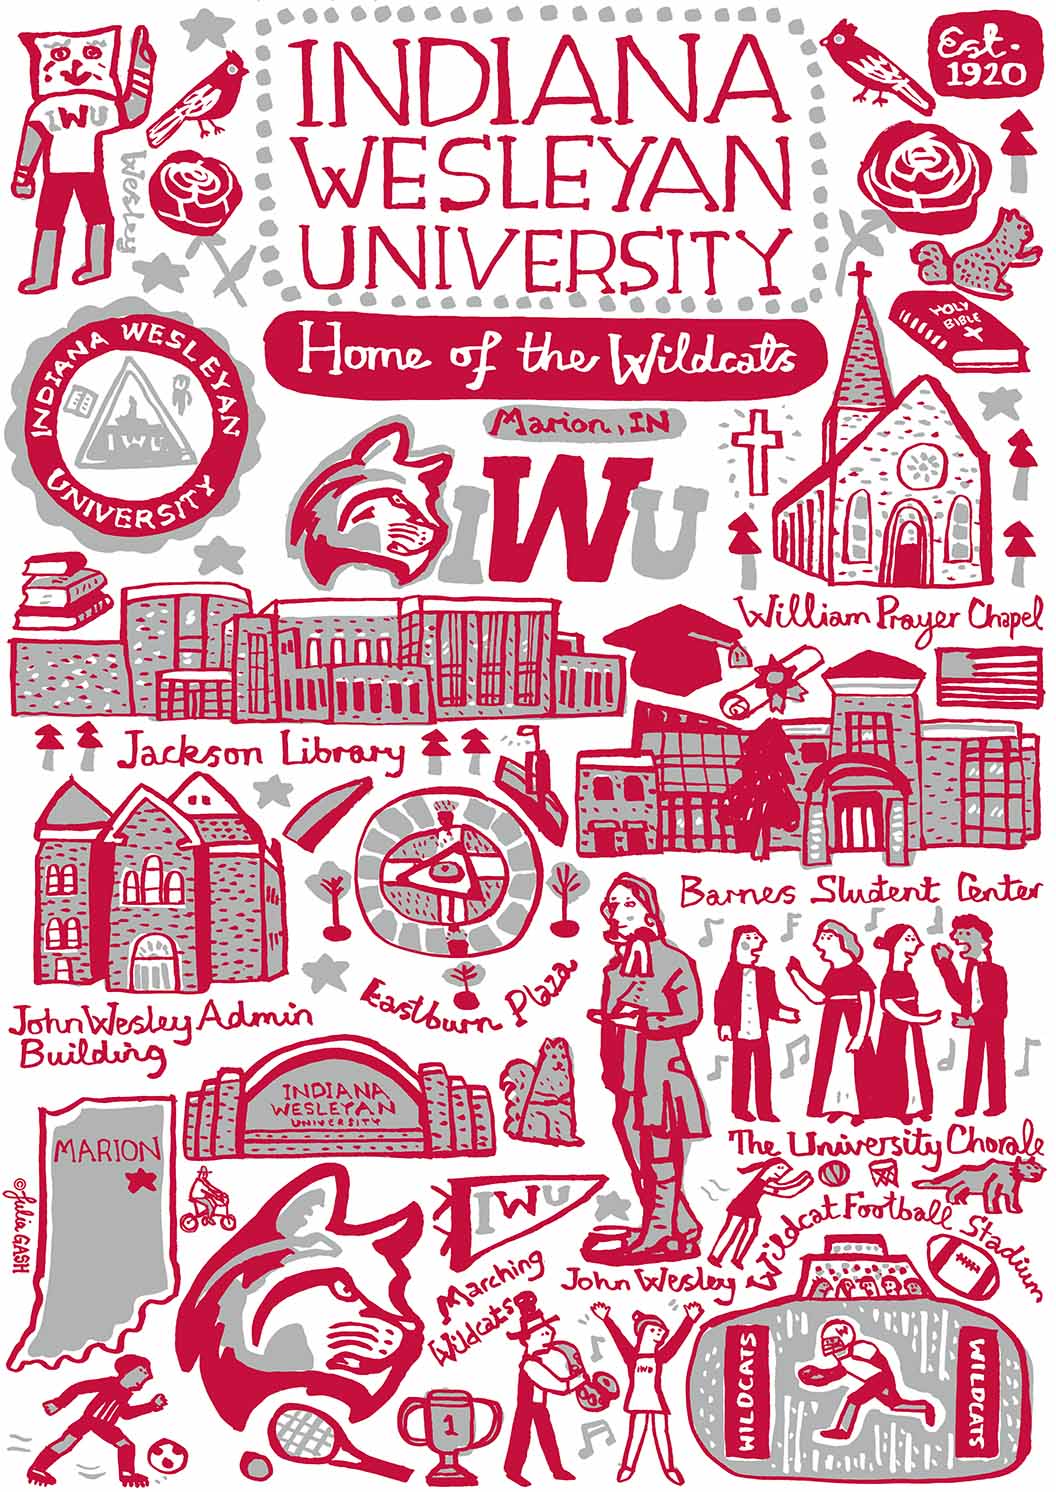 Indiana Wesleyan University Design by Julia Gash